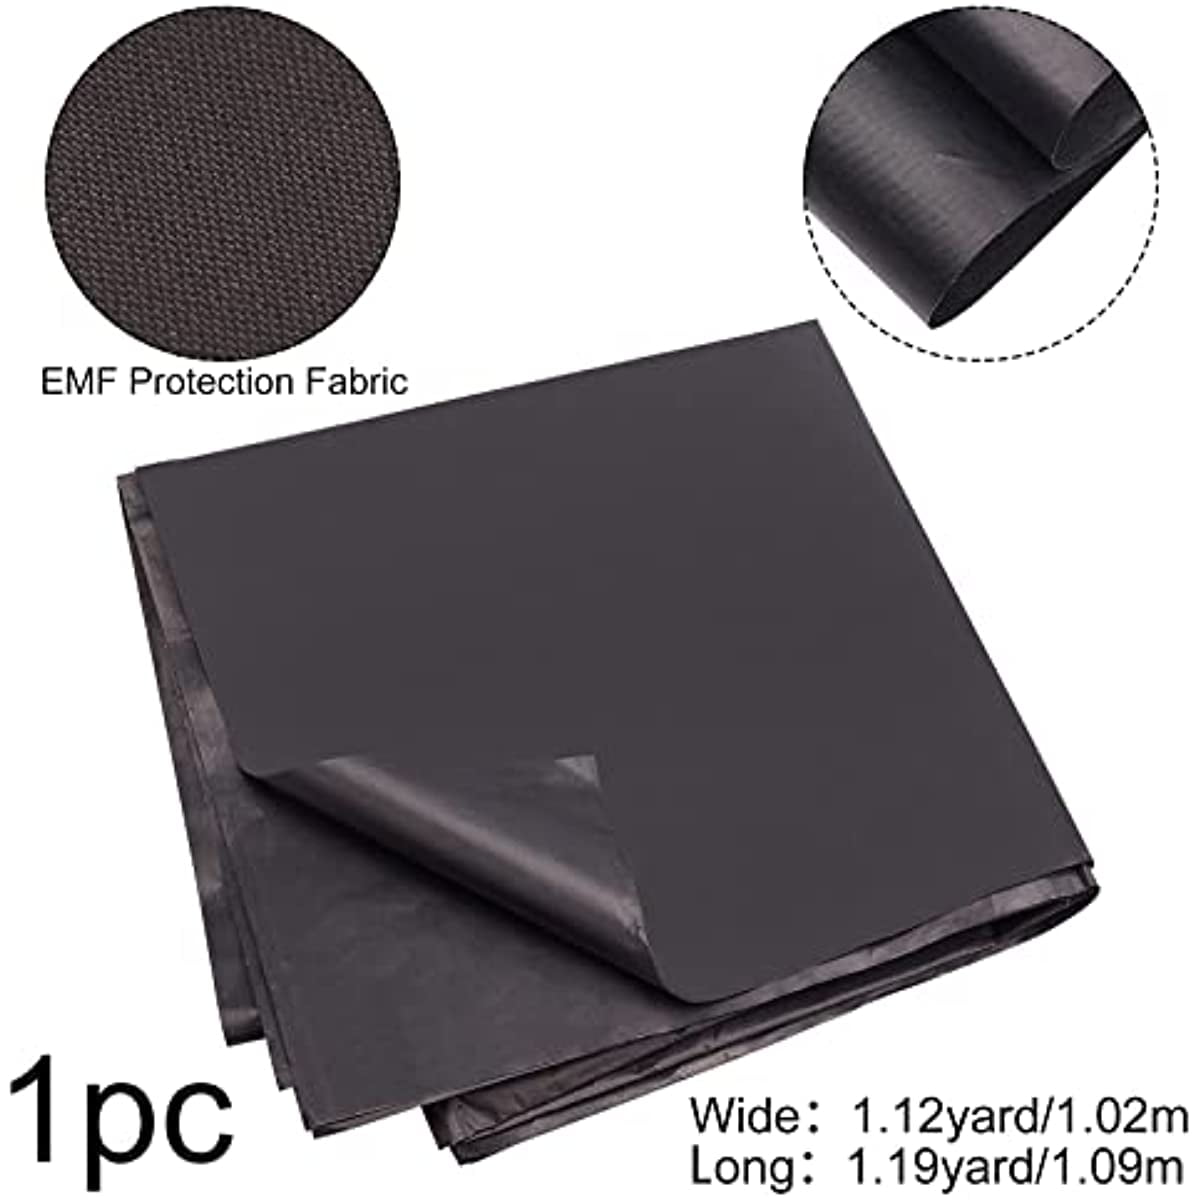 China Factory EMF Protection Fabric, Faraday Fabric, EMI, RF